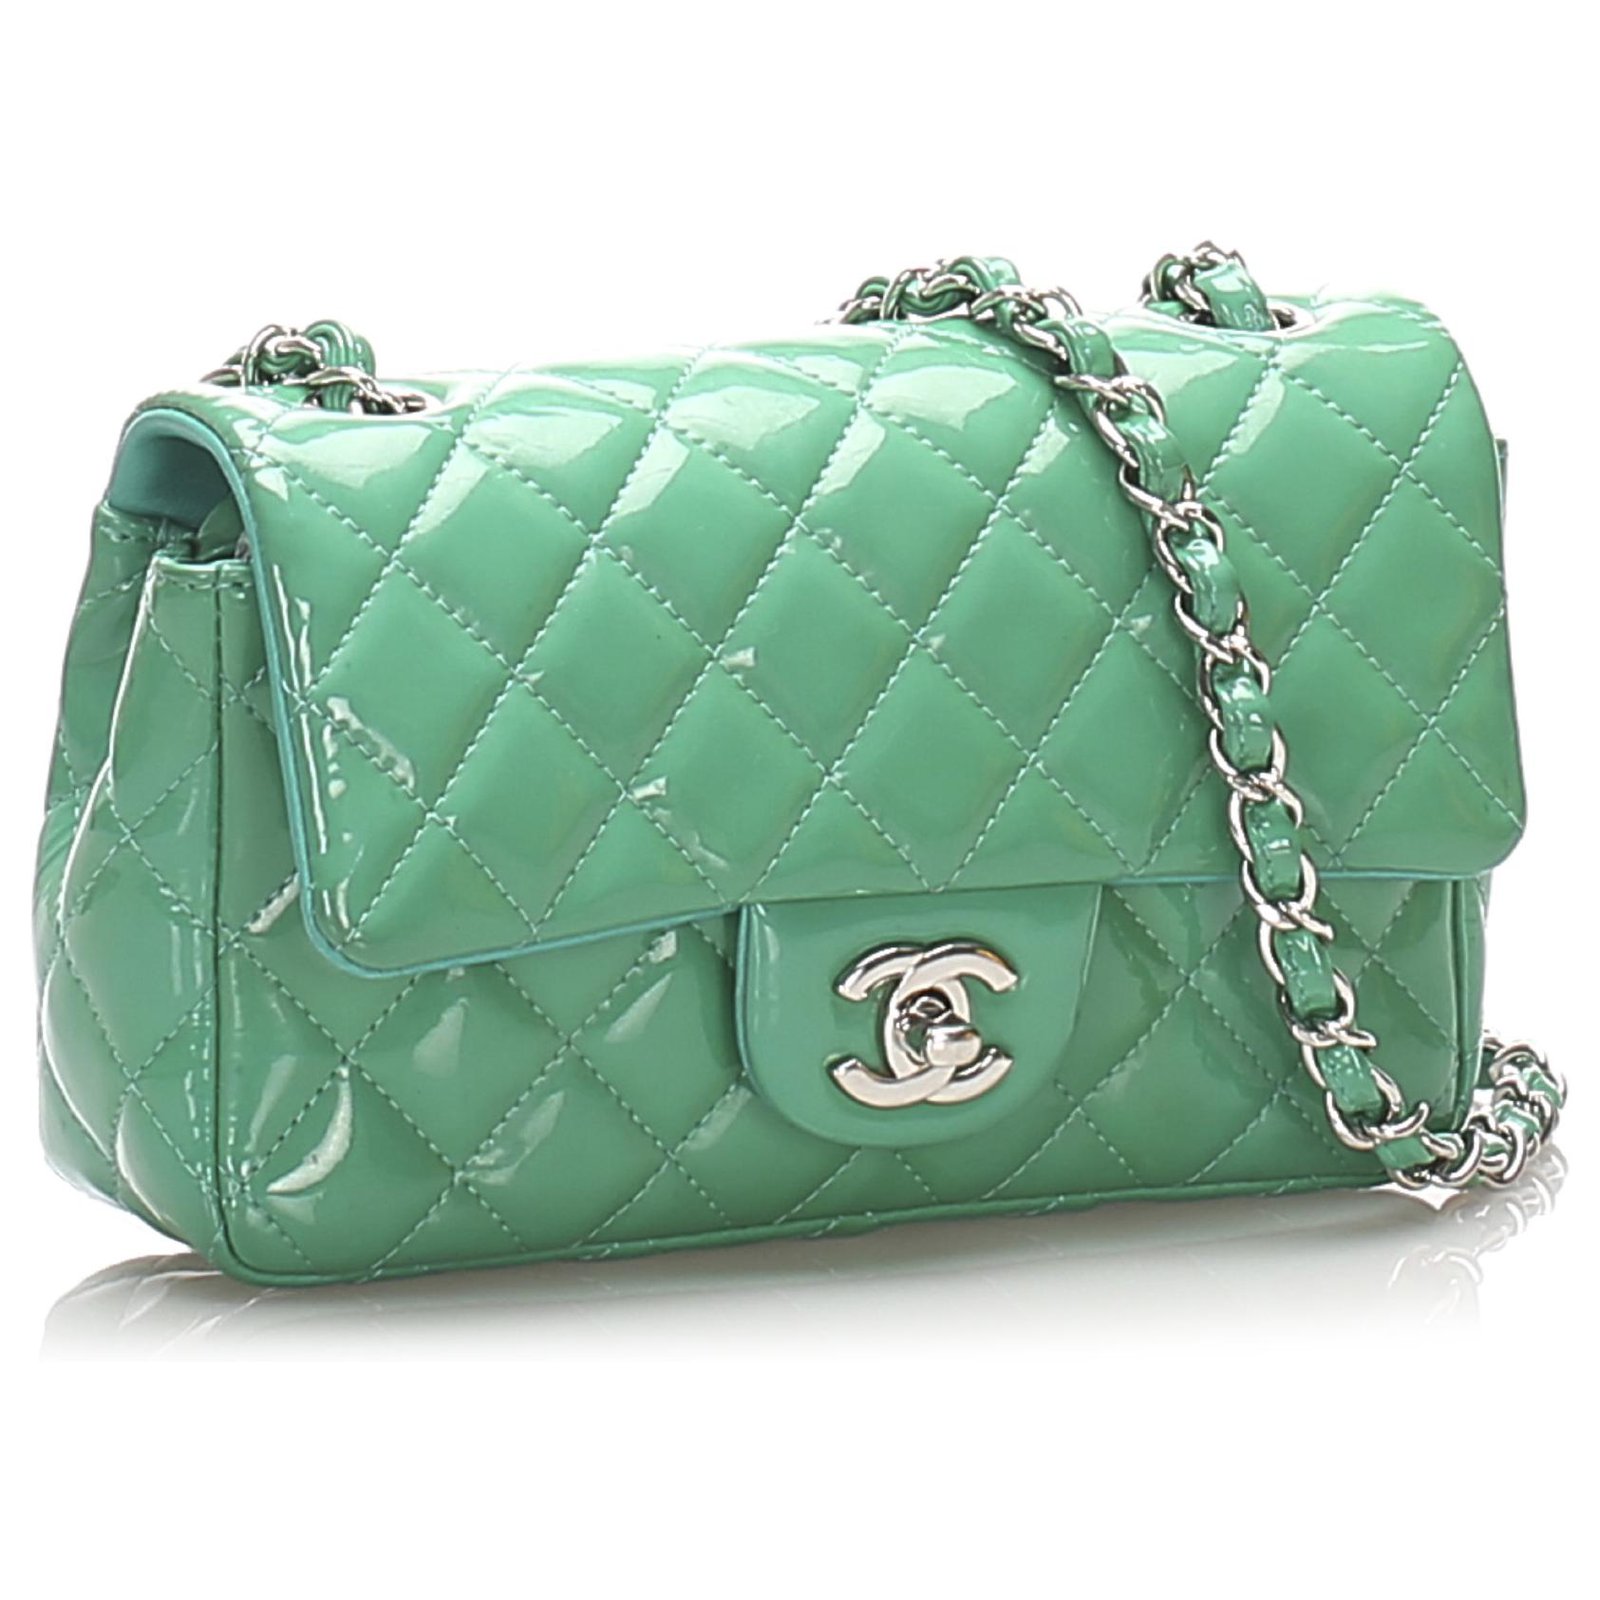 Chanel Green Classic New Mini Patent Leather Flap Bag